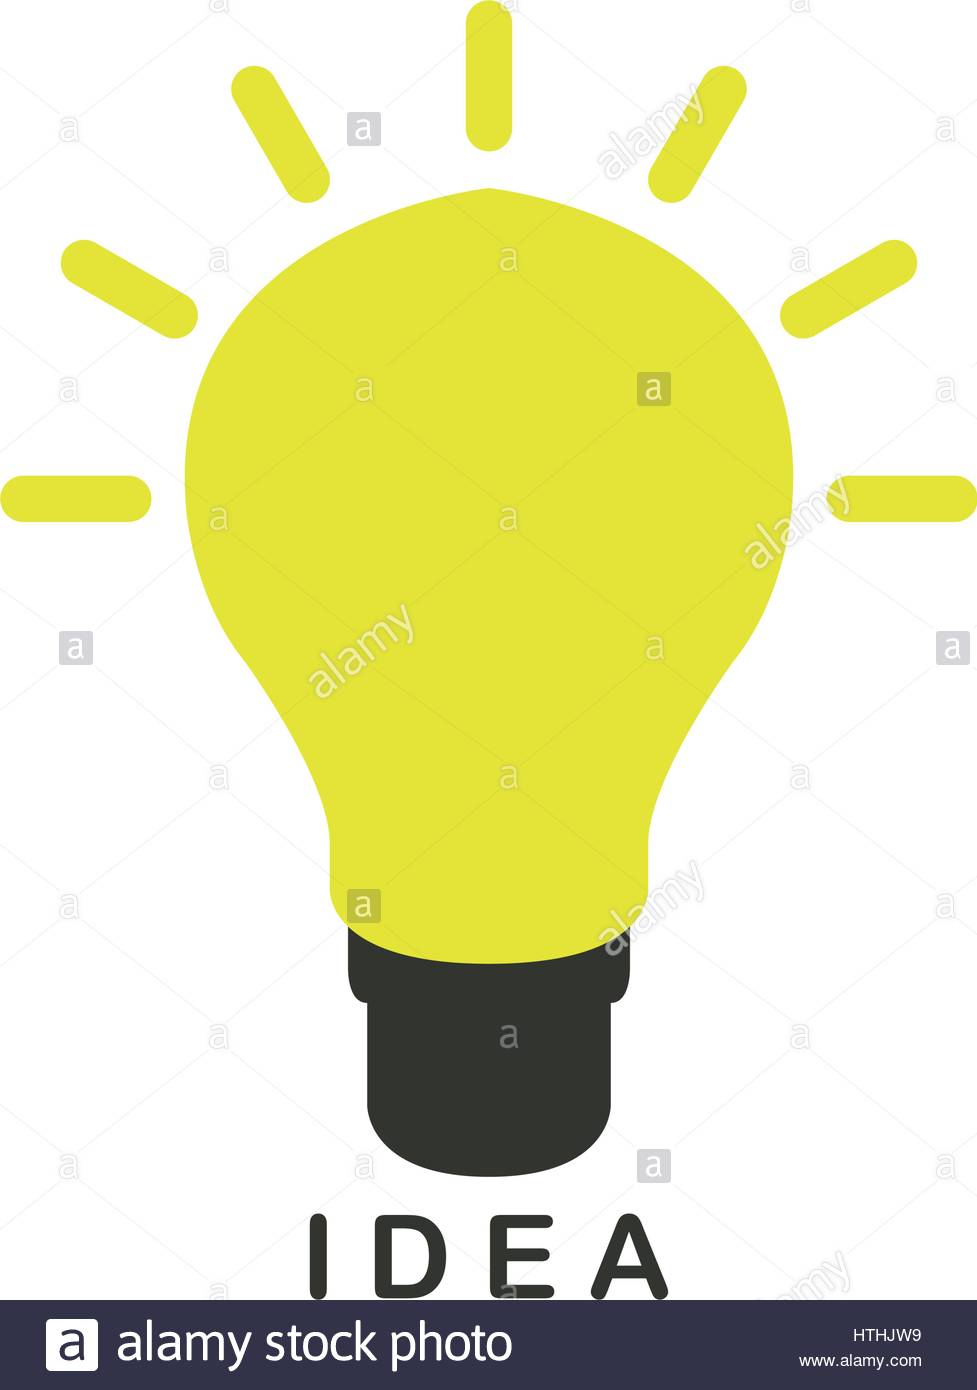 Brainstorming, creativity, idea, light bulb icon | Icon search engine